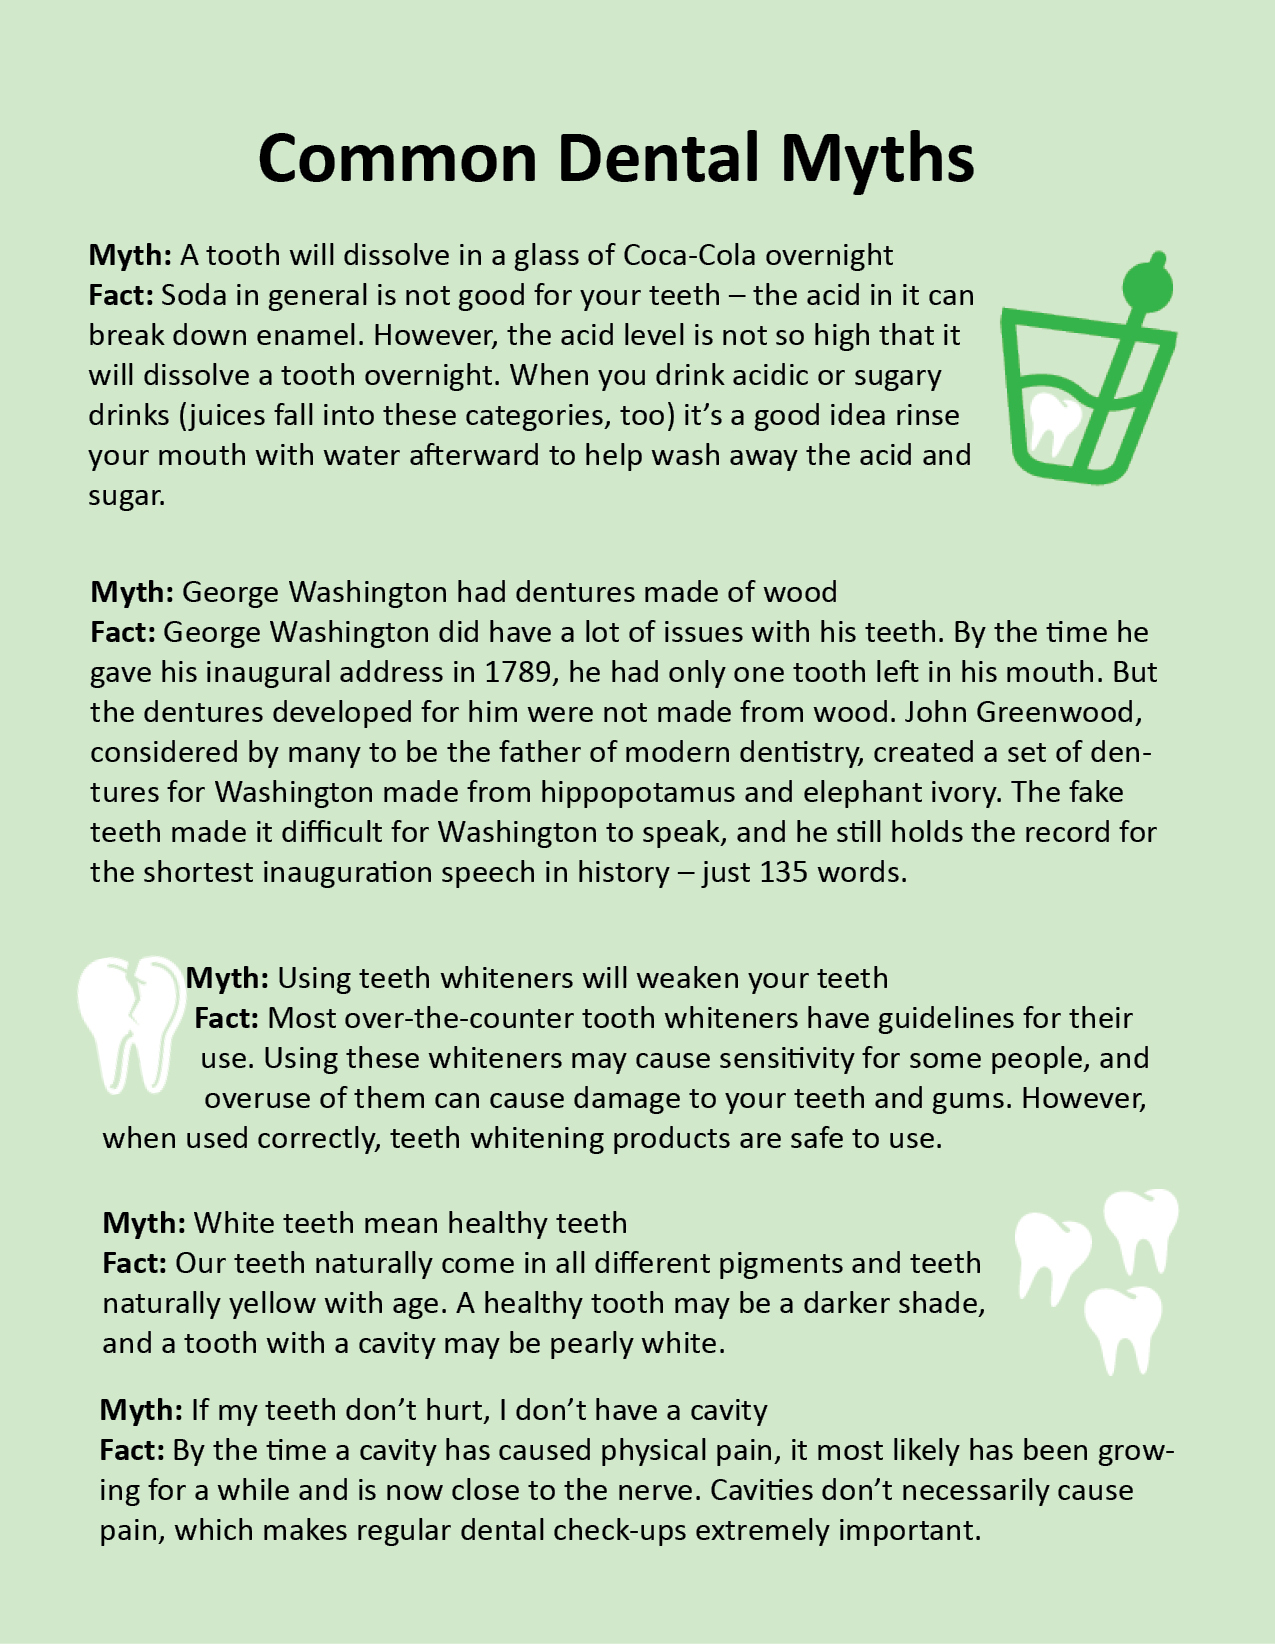 Common Dental Myths article